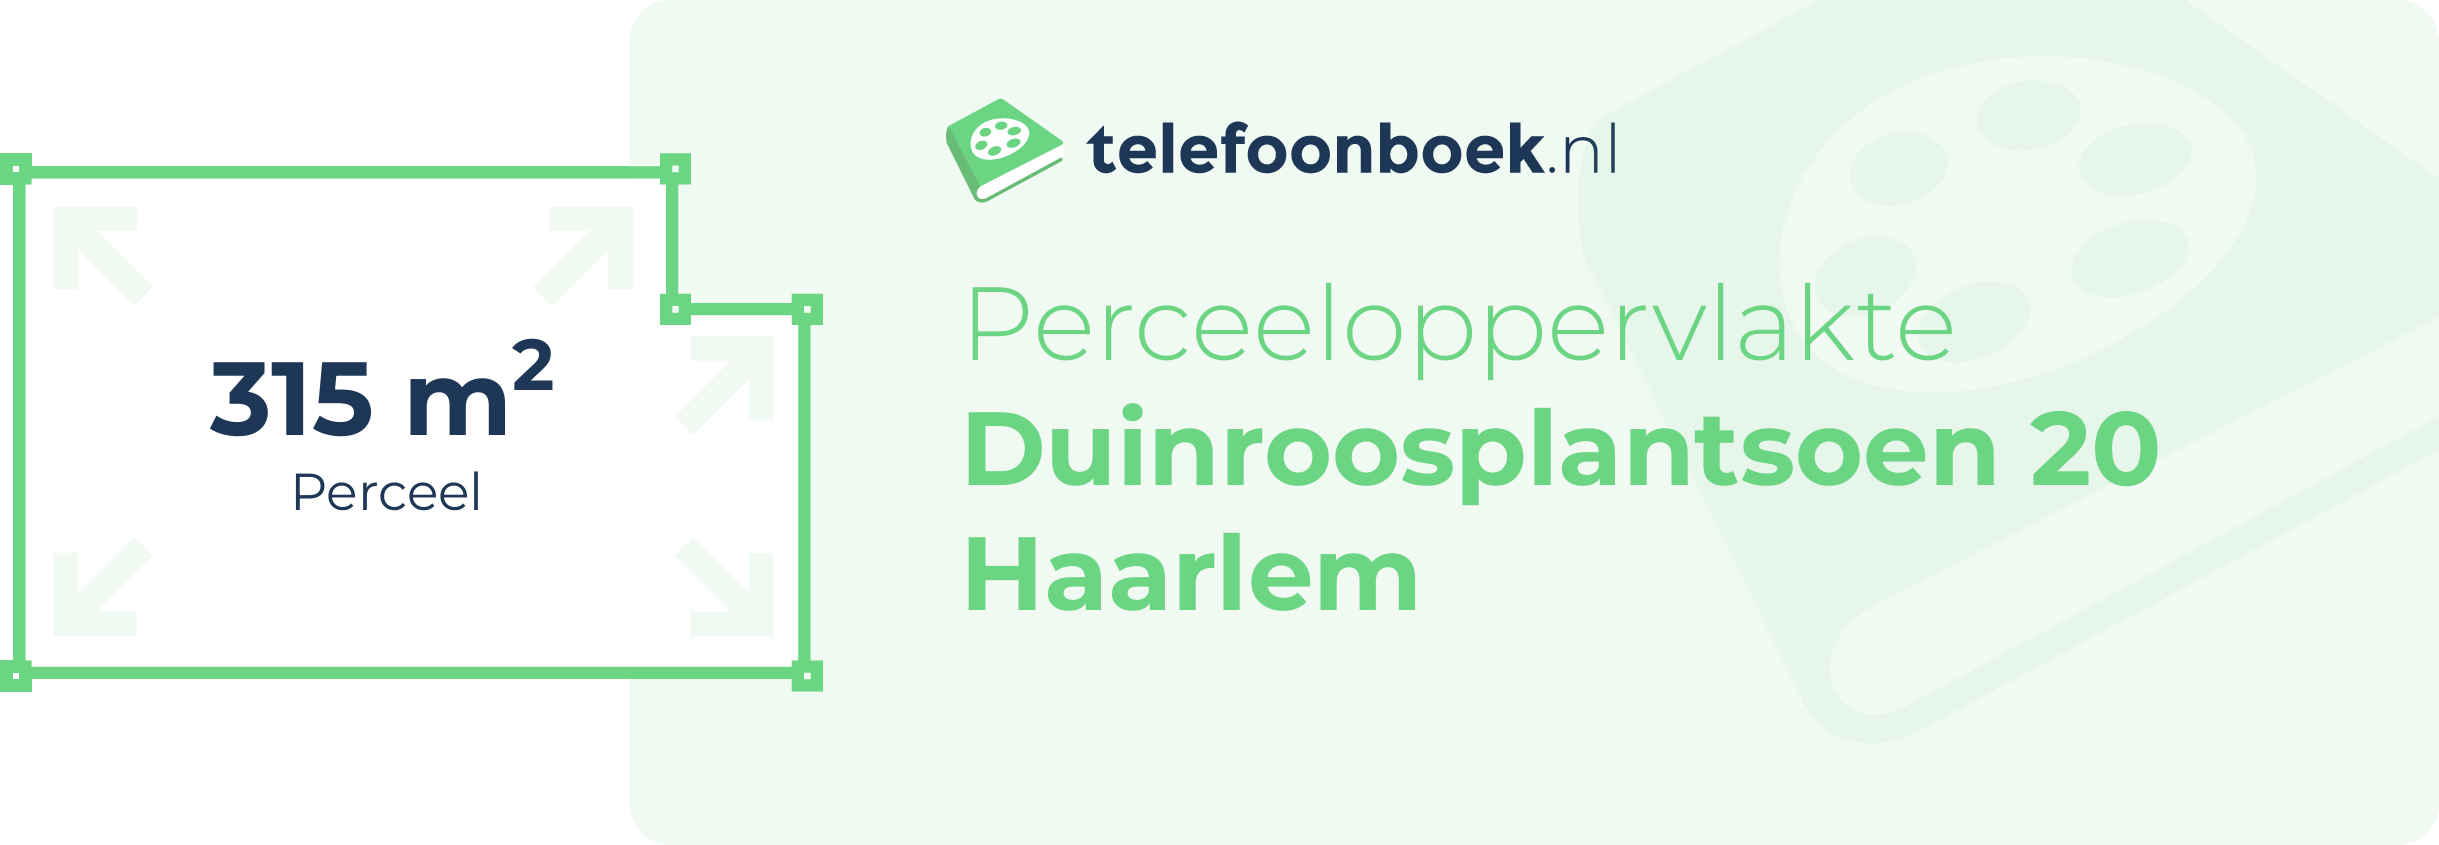 Perceeloppervlakte Duinroosplantsoen 20 Haarlem